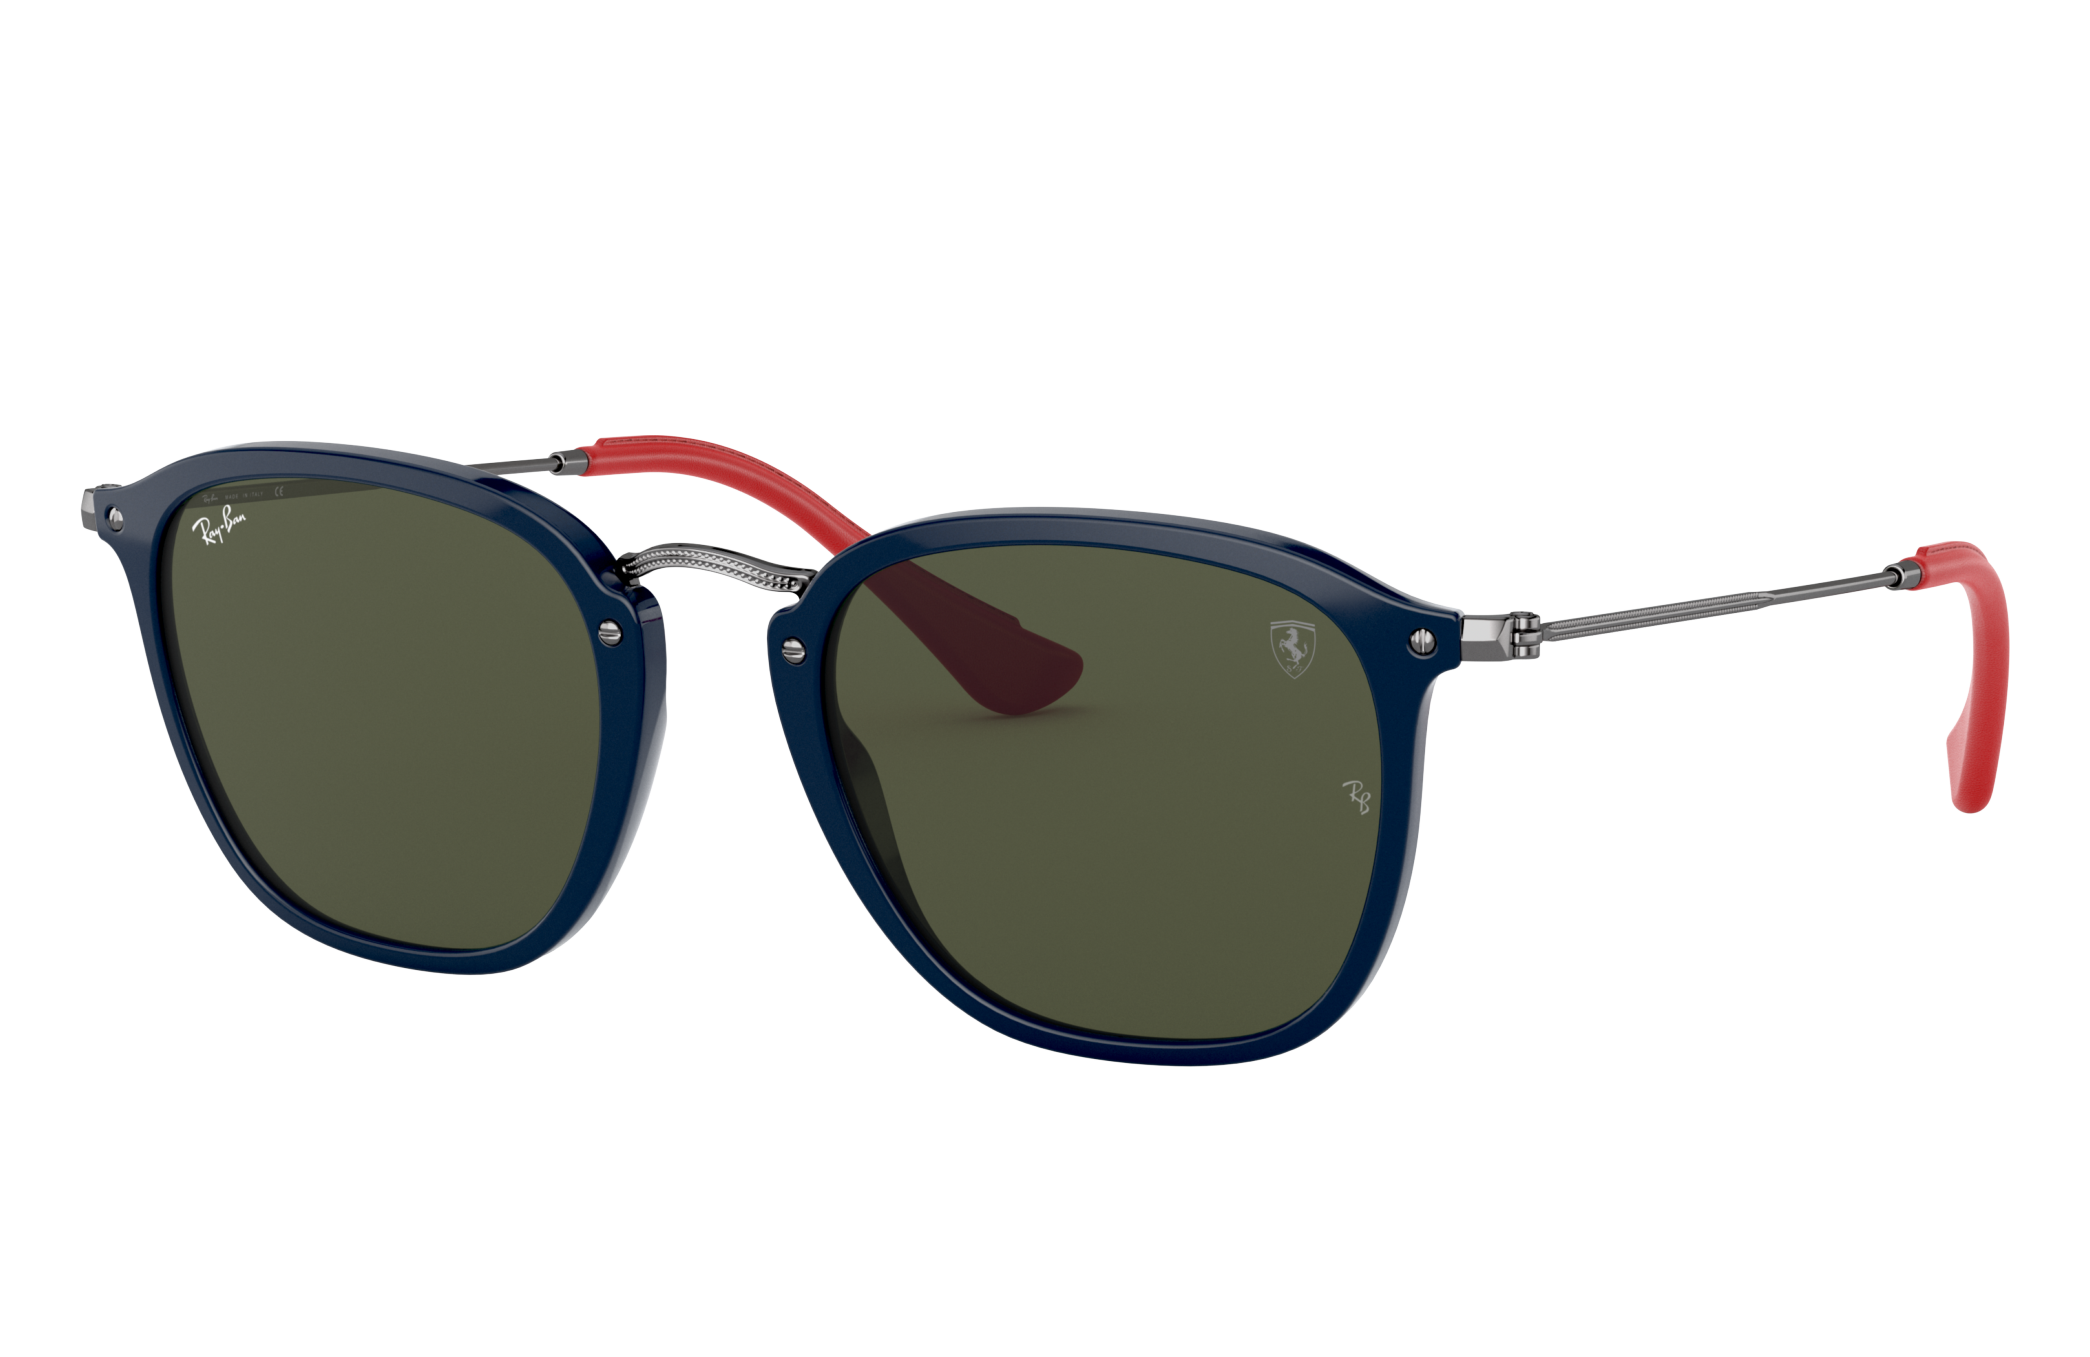 Rb2448nm Scuderia Ferrari Collection Sunglasses in Blue and Green | Ray-Ban®